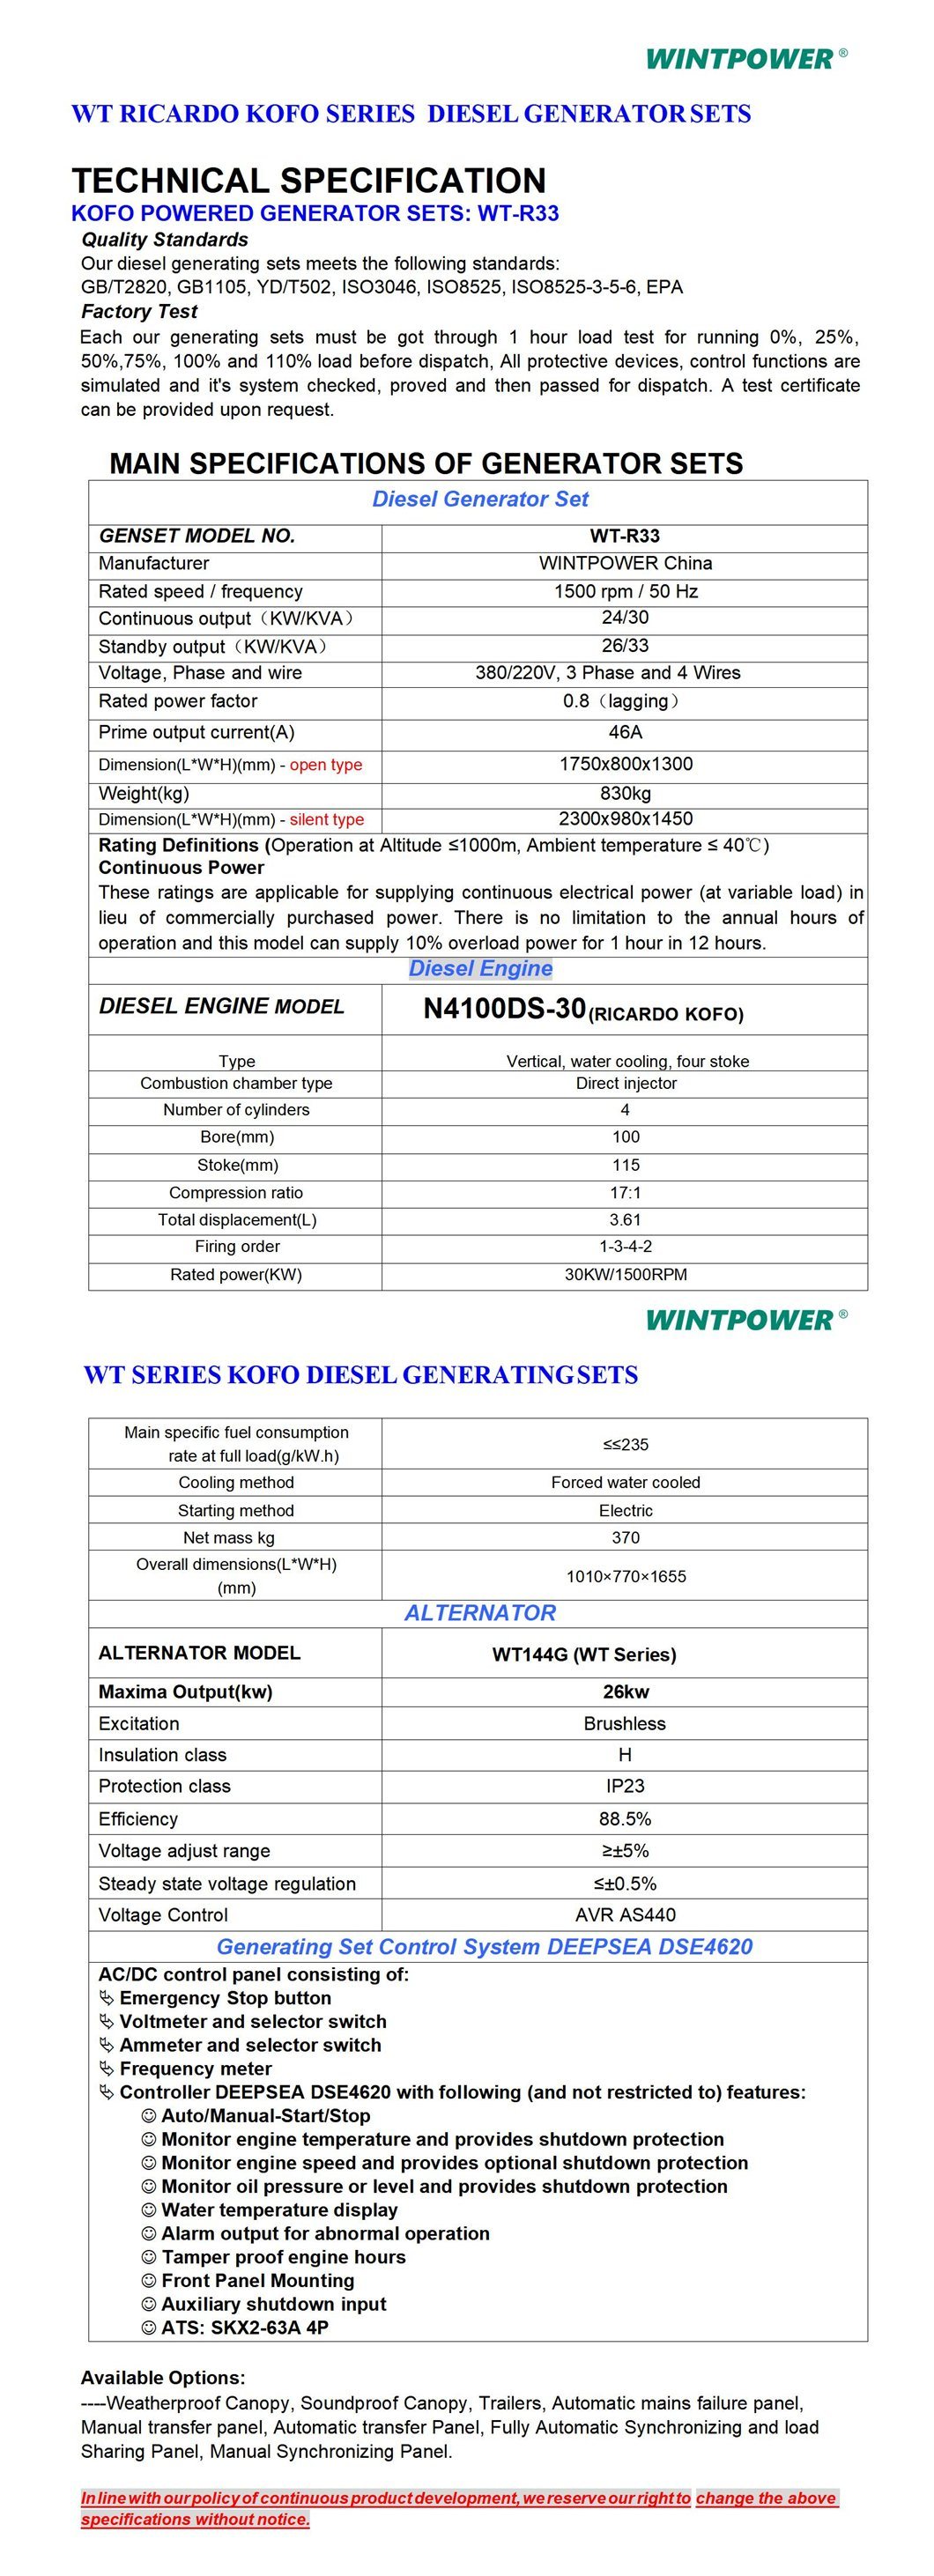 Weichai Kofo Ricardo Diesel Generator Set Dg Genset 30kVA N4100ds-30 40kVA N4105ds-38 50kVA N4105ds-42 60kVA N4105zds 75kVA N4105zds 805kVA N4105zds 805kVA